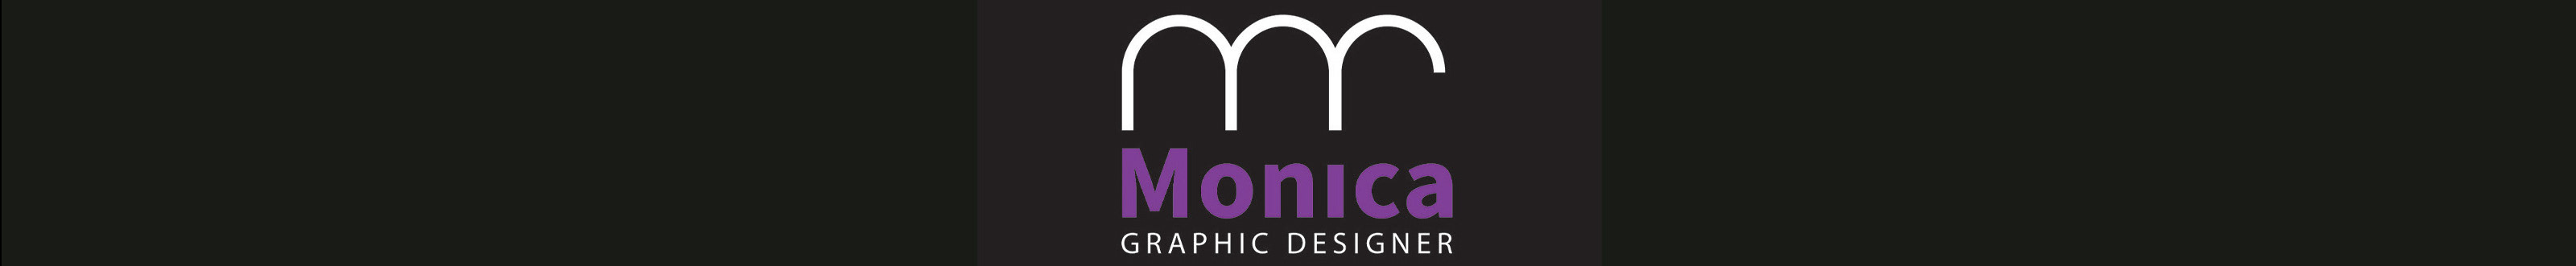 Monica Rode profil başlığı